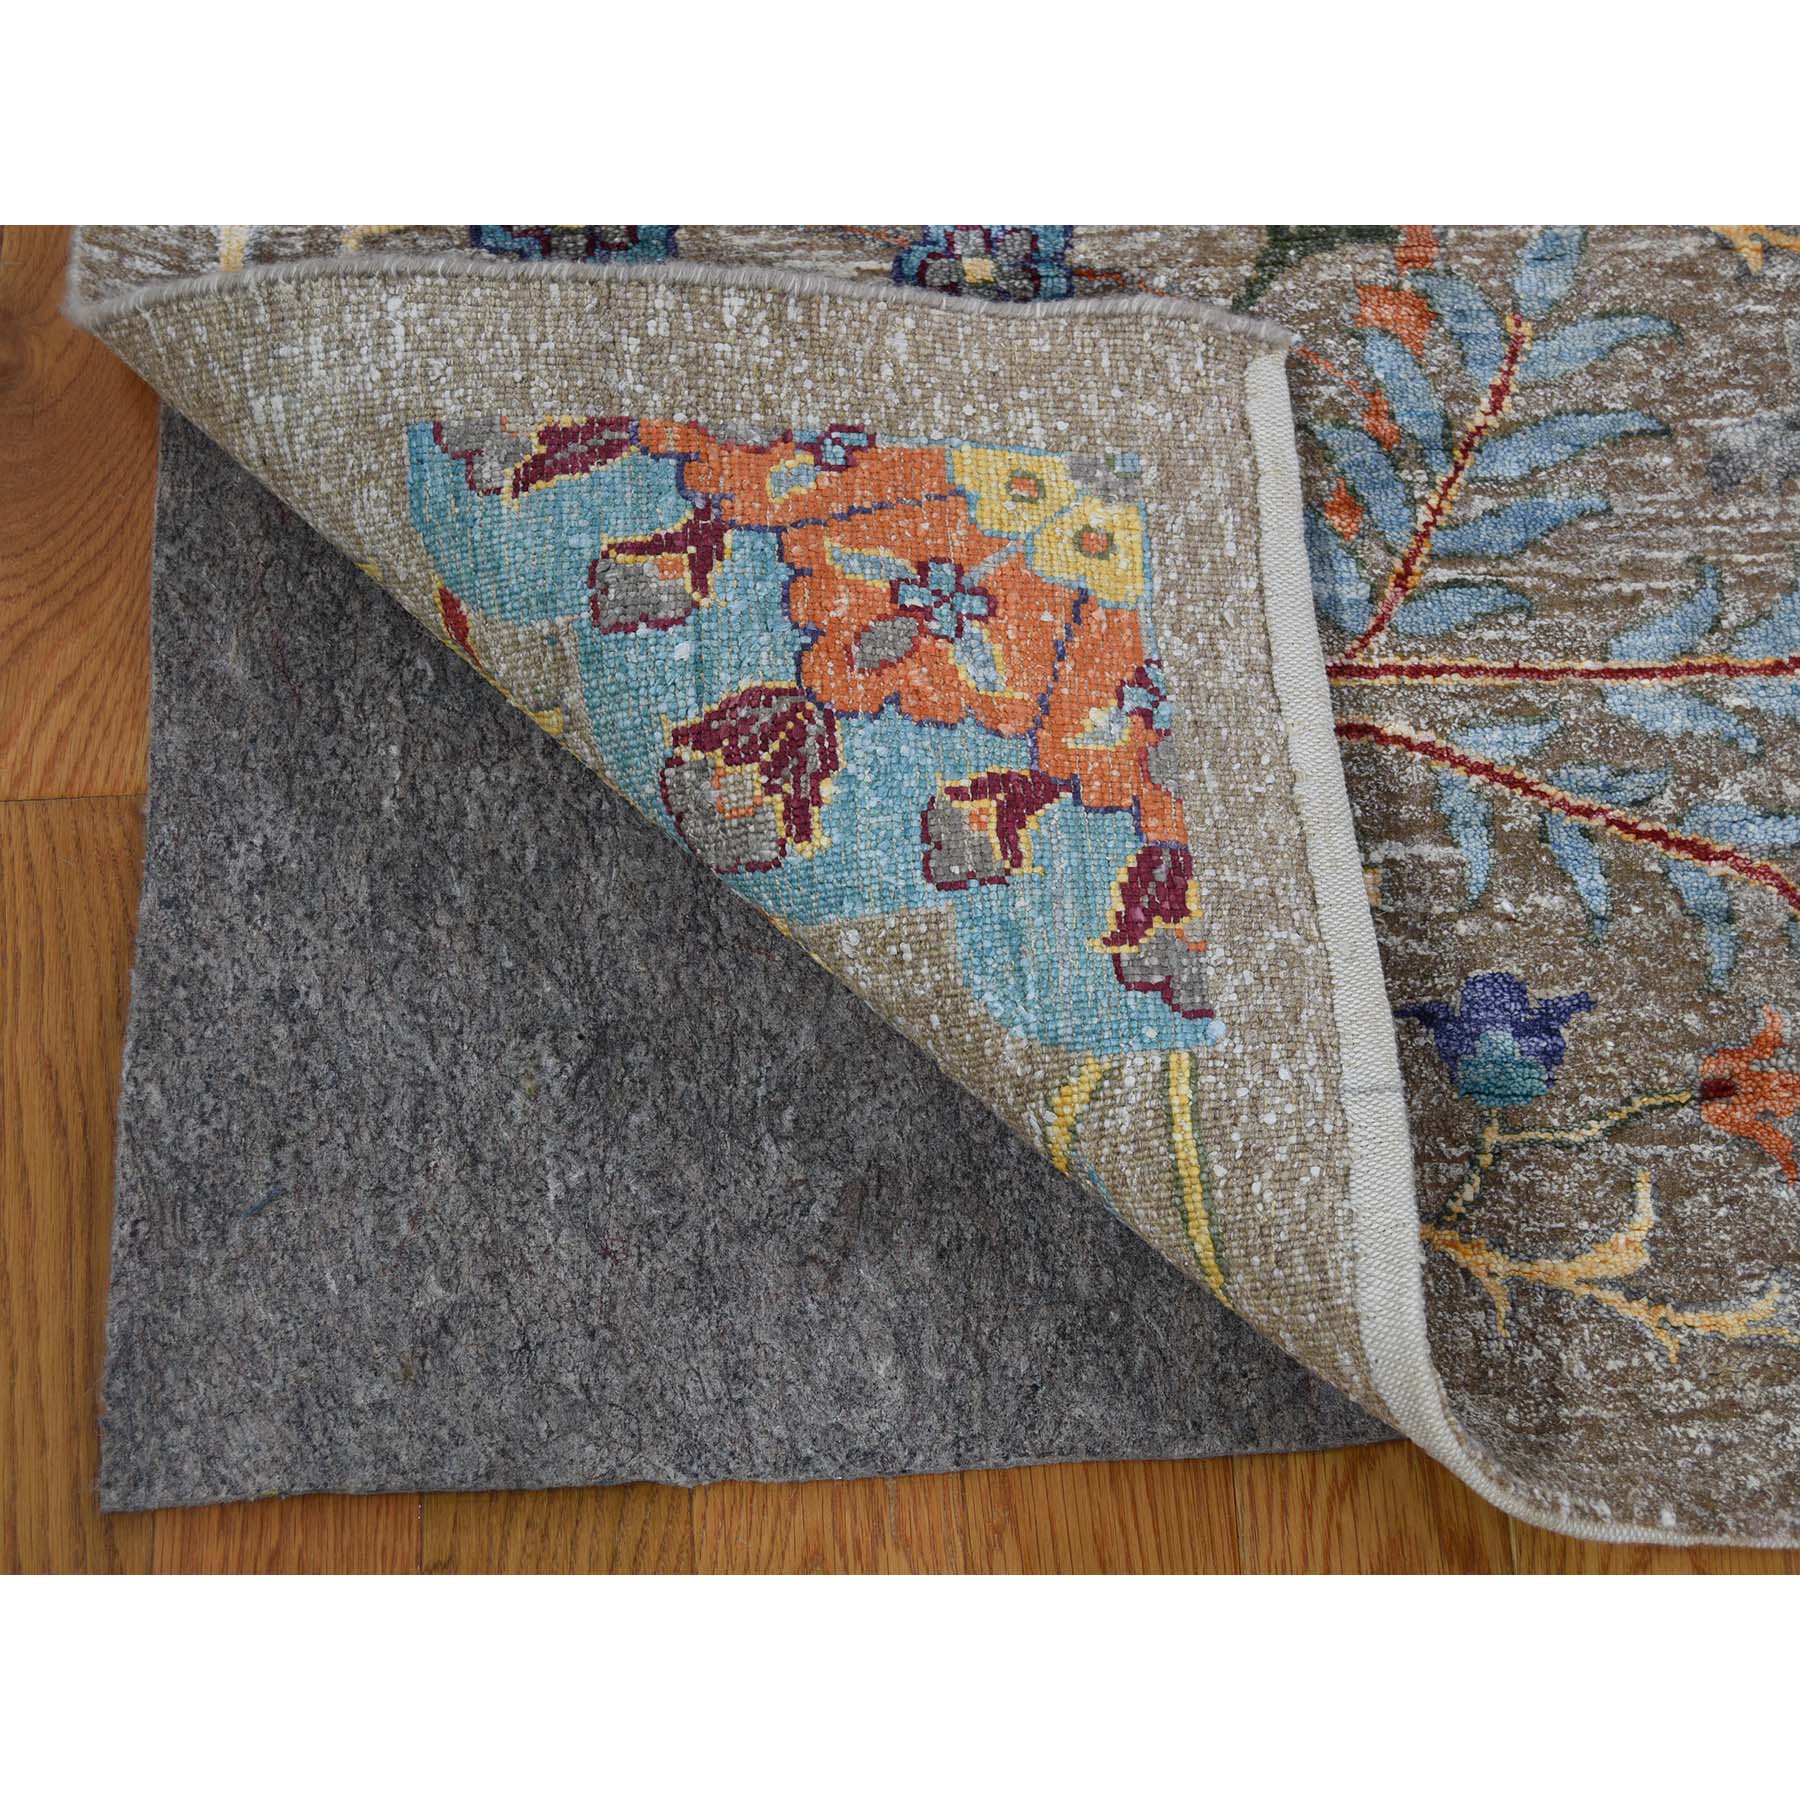 12-1 x15-3  Sickle Leaf Design Textured Silk With Textured Wool Hand-Knotted Oversize Oriental Rug 